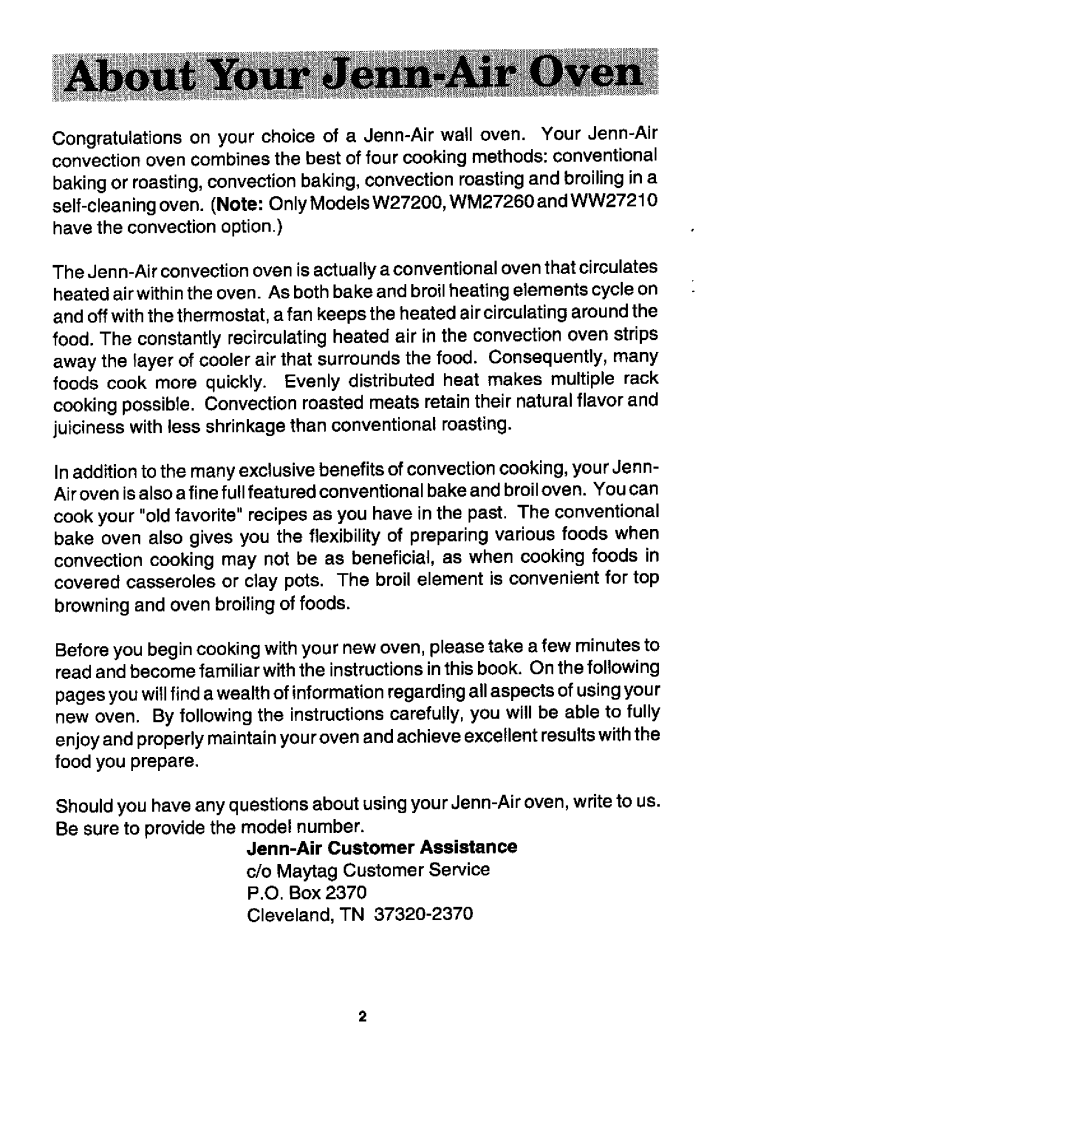 Jenn-Air WW27110, W27200, W27100, WW27210 Jeflfl-AirCustomer Assistance, c/o Maytag Customer Service P,O, Box, Cleveland, TN 